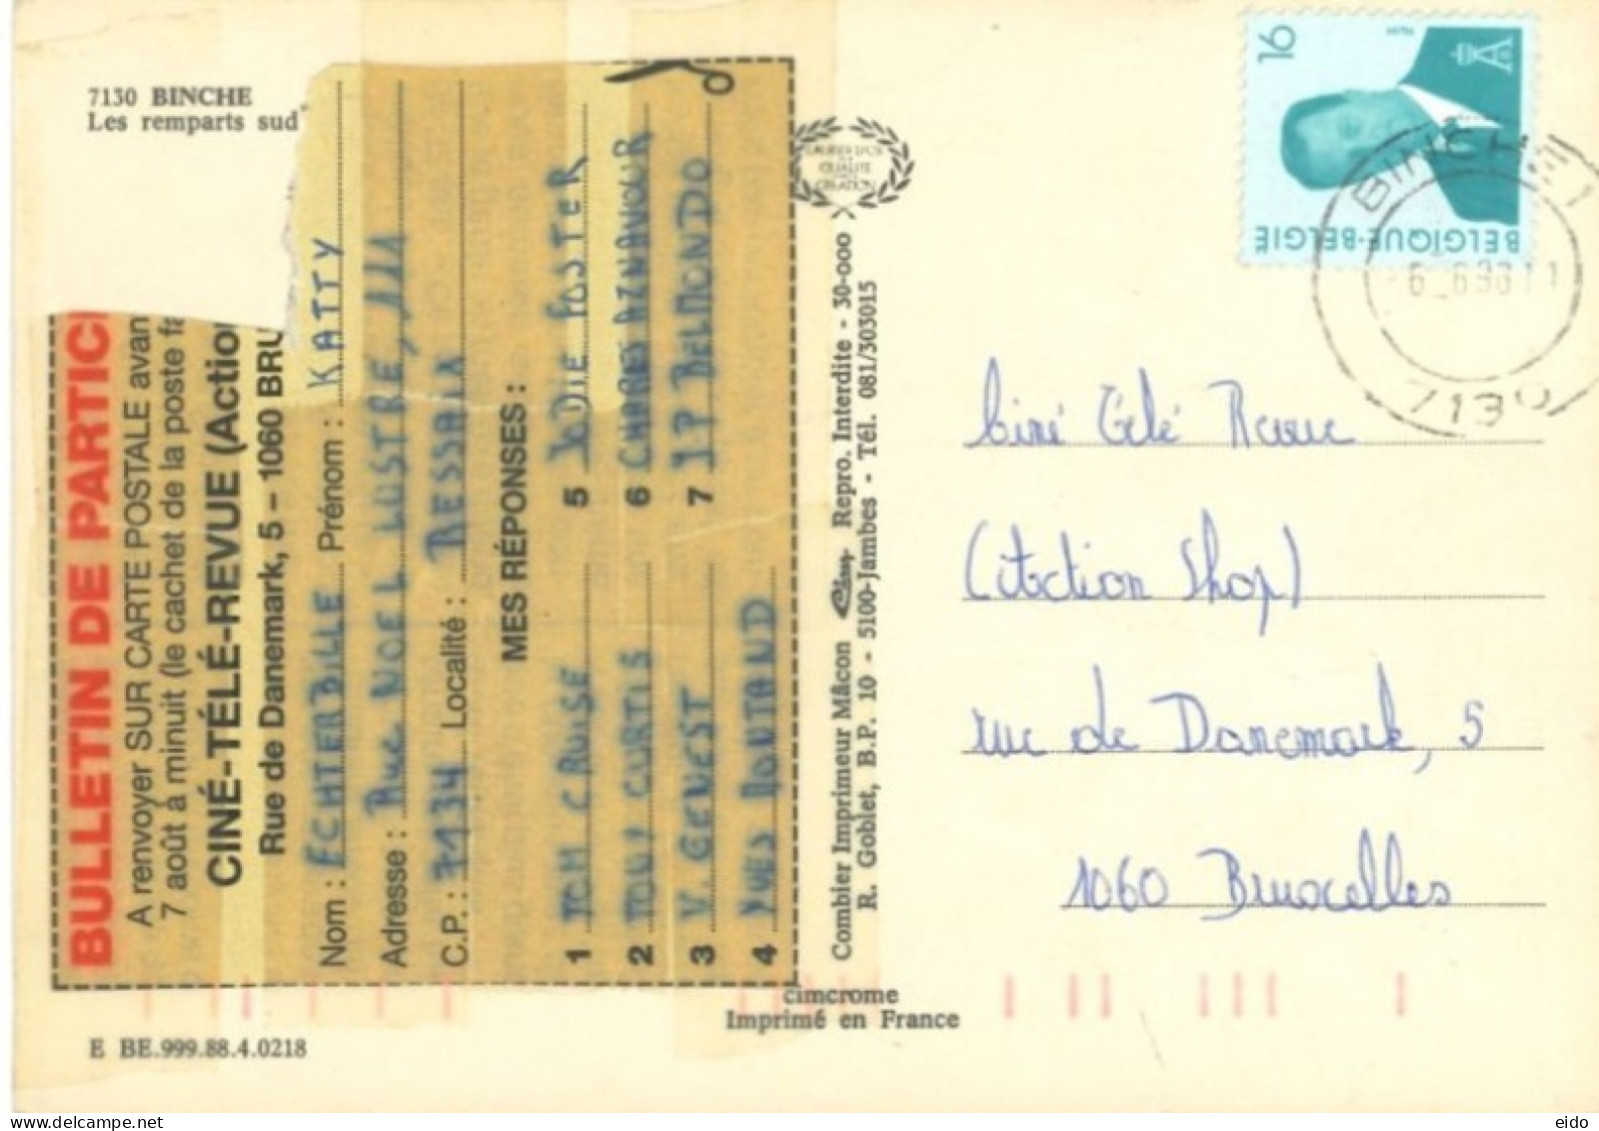 BELGIUM - 1963, BINCHE, LE REMPARTS SUD POSTCARD WITH STAMP SENT TO BRUOCELLES. - Lettres & Documents